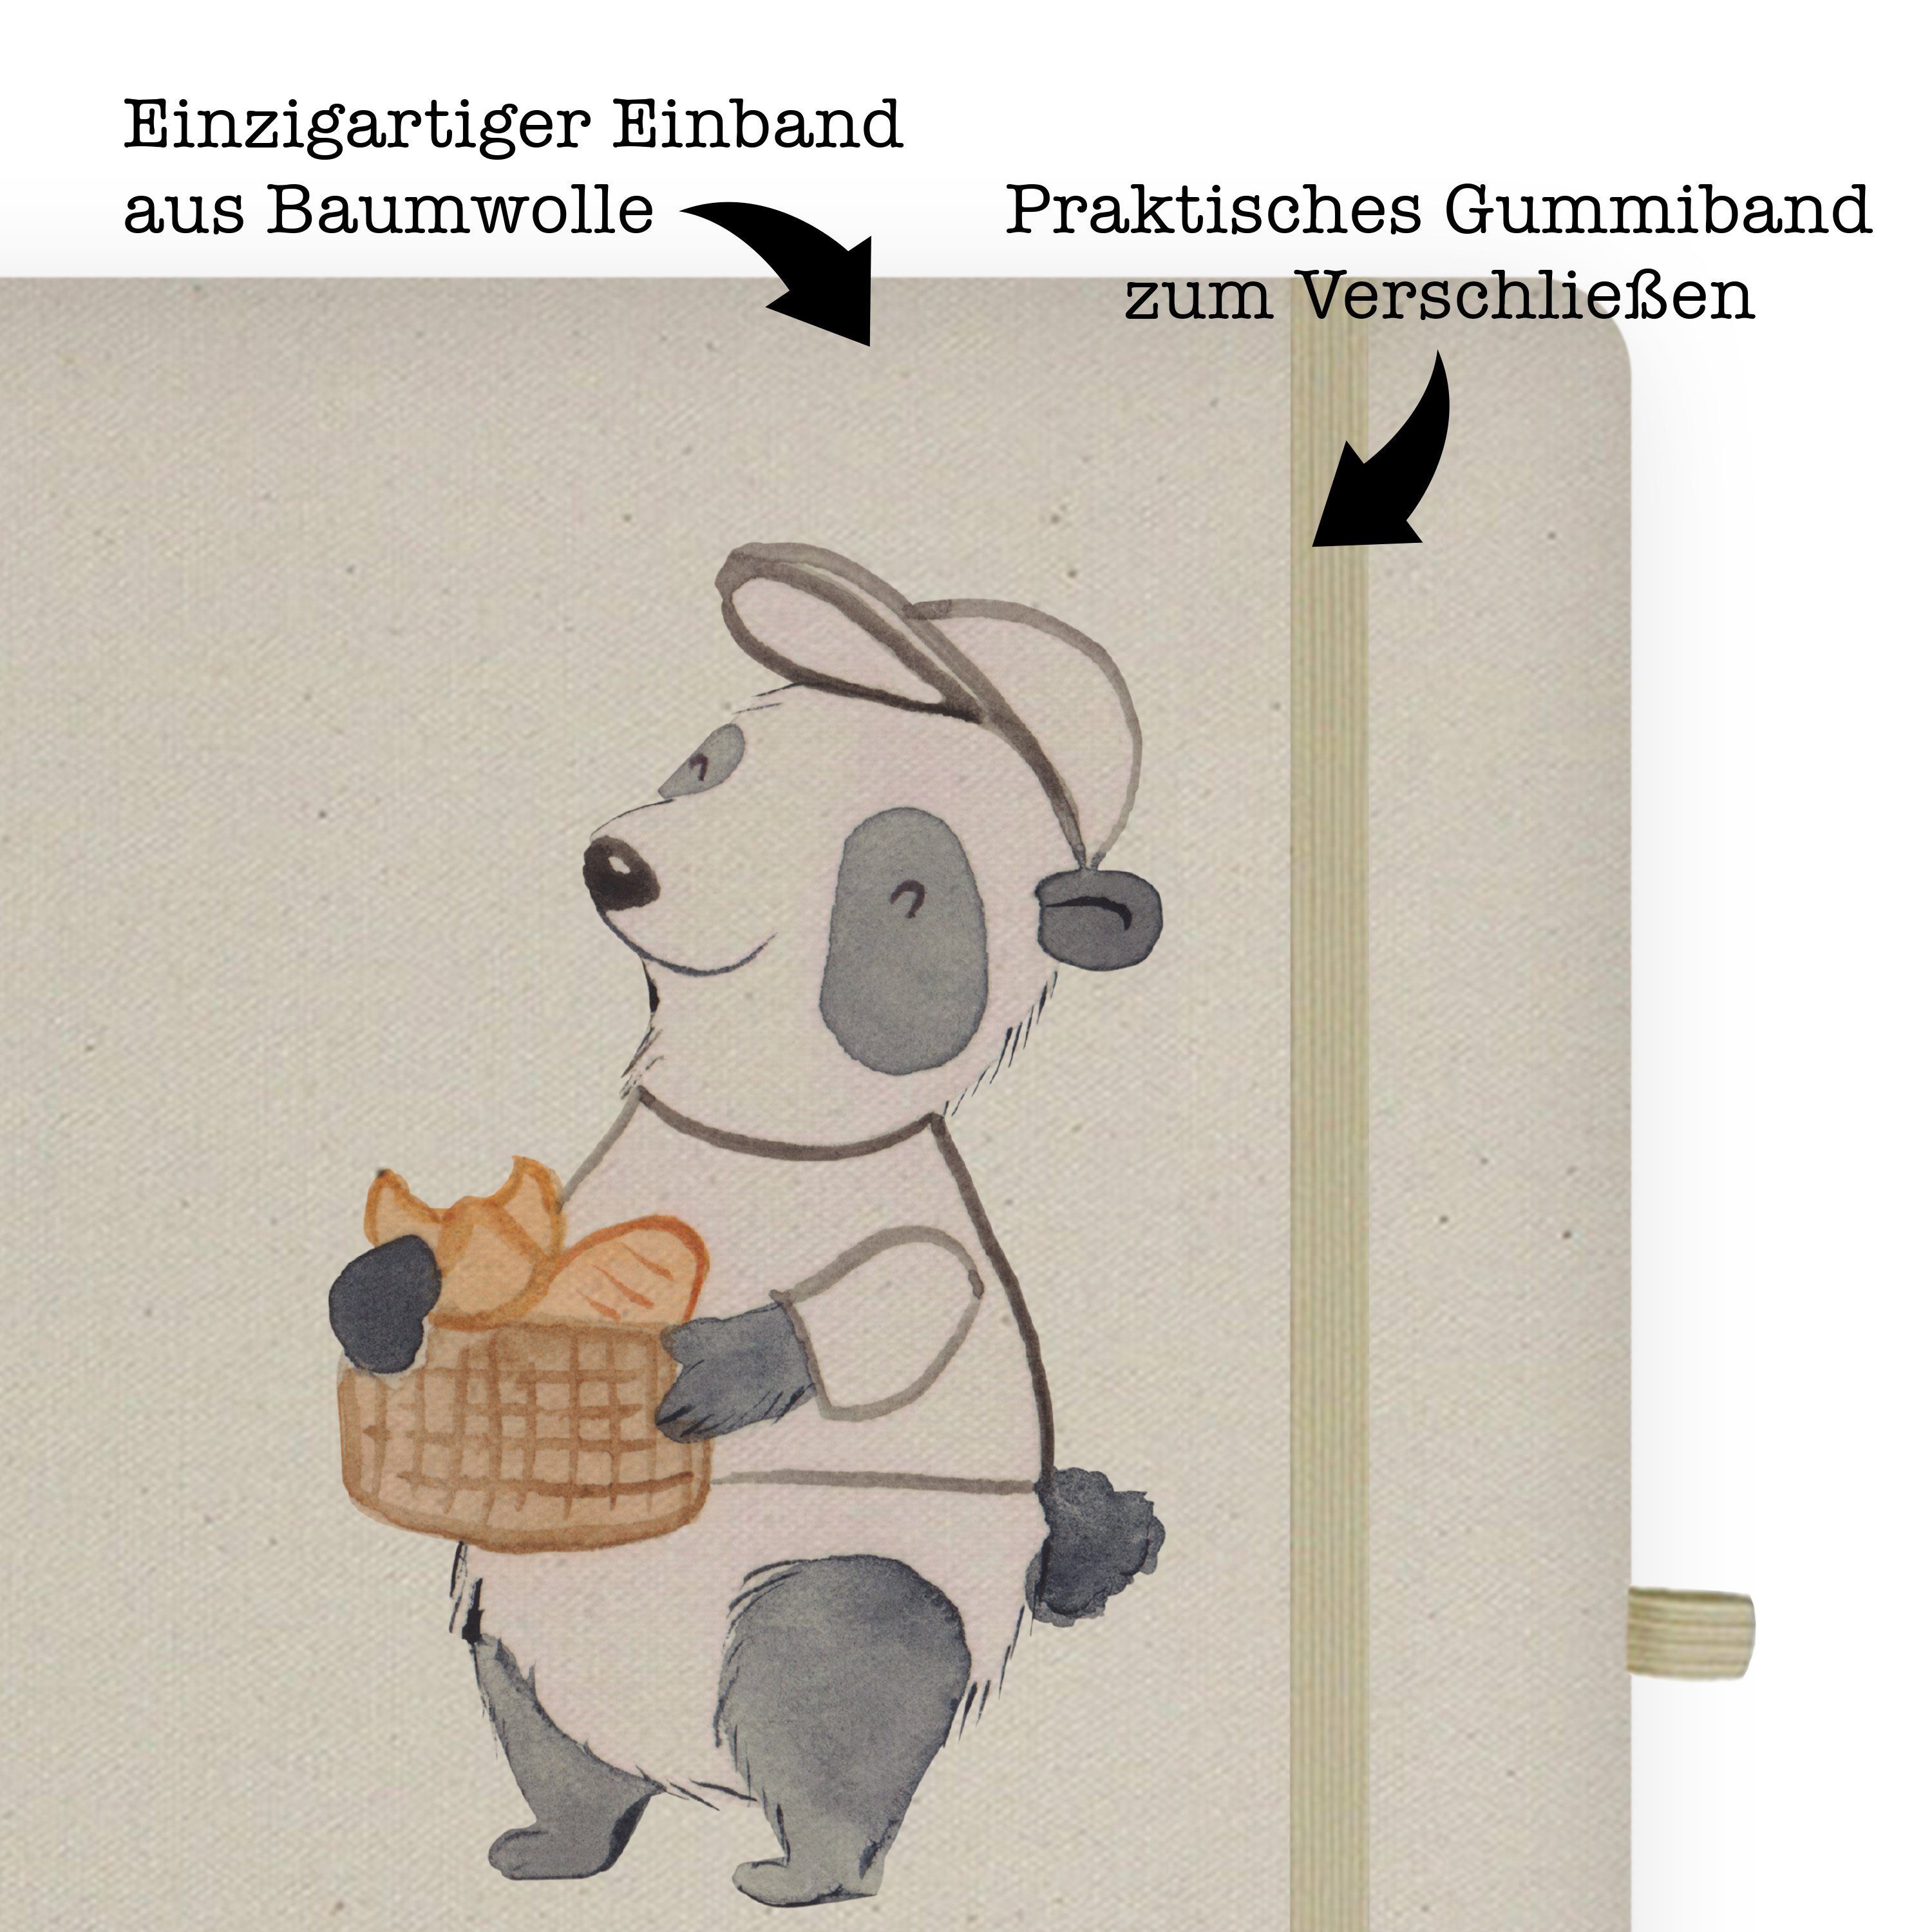 & mit Notizbuch - Mr. Geschenk, Panda Bäckereifachverkäufer & Mrs. Panda - Mr. Mrs. Transparent Adressbuch, Herz